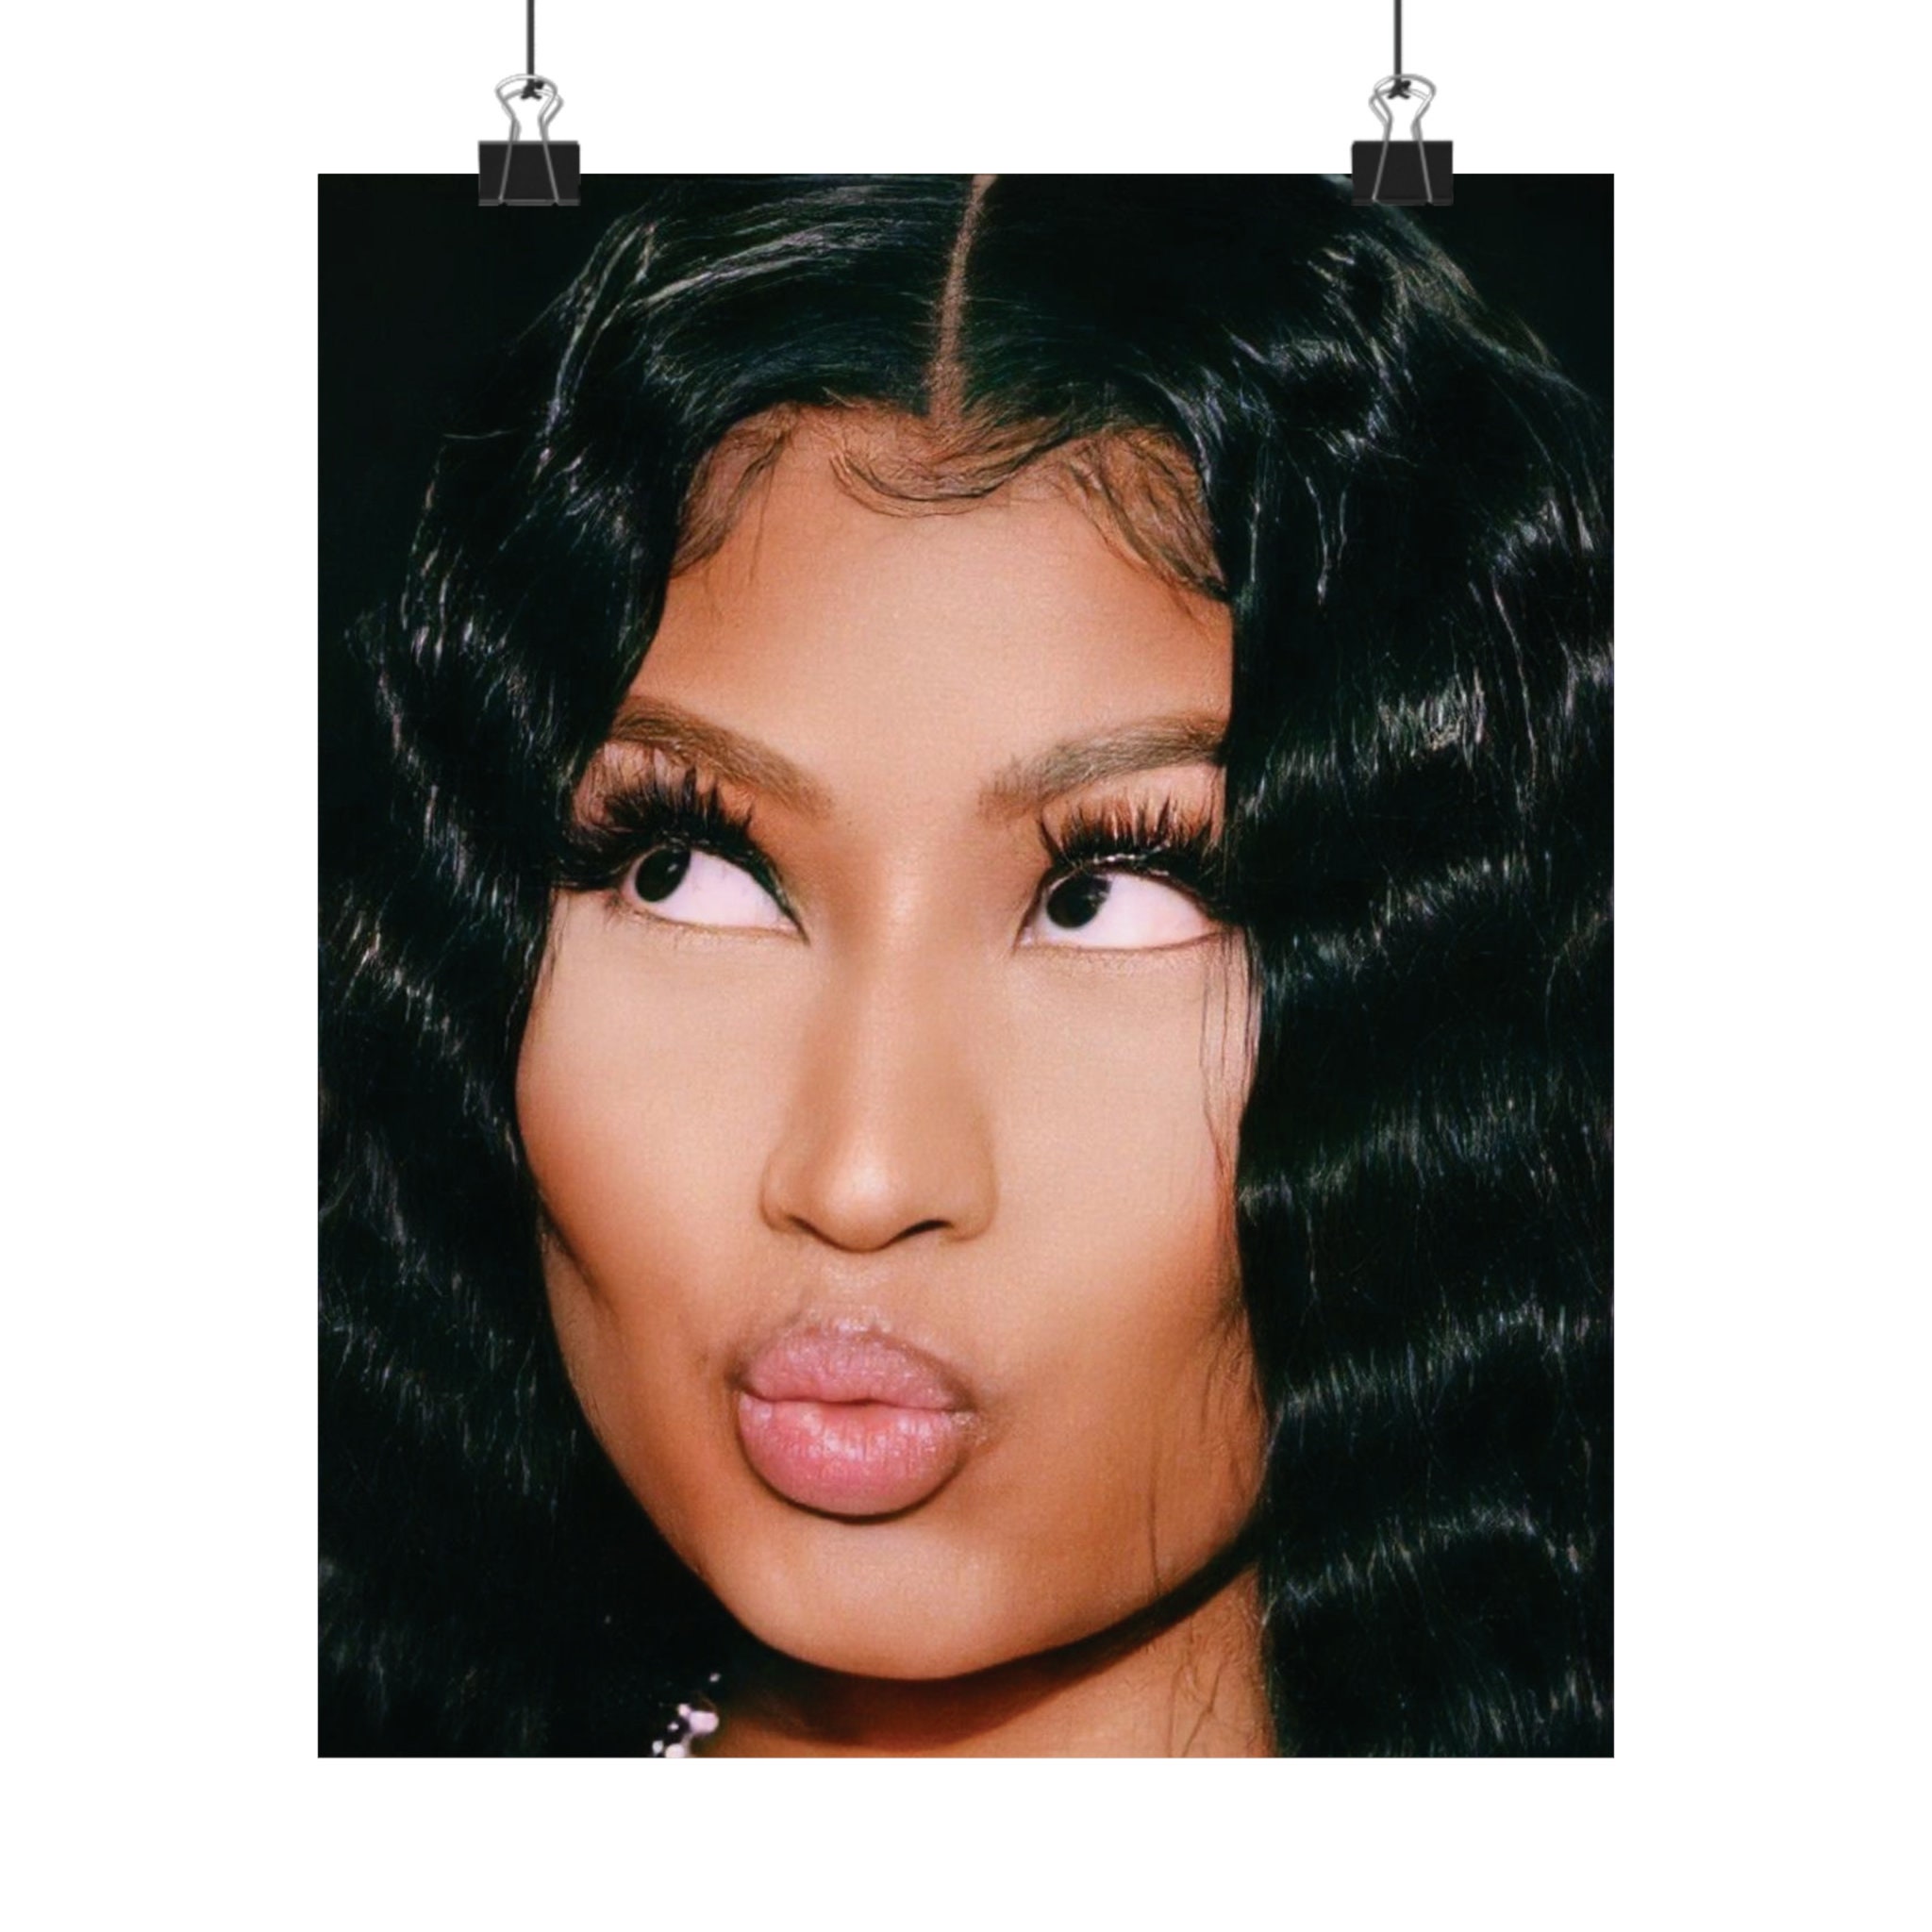 The Nicki Minaj Matte Vertical Poster, Nicki Minaj Merch